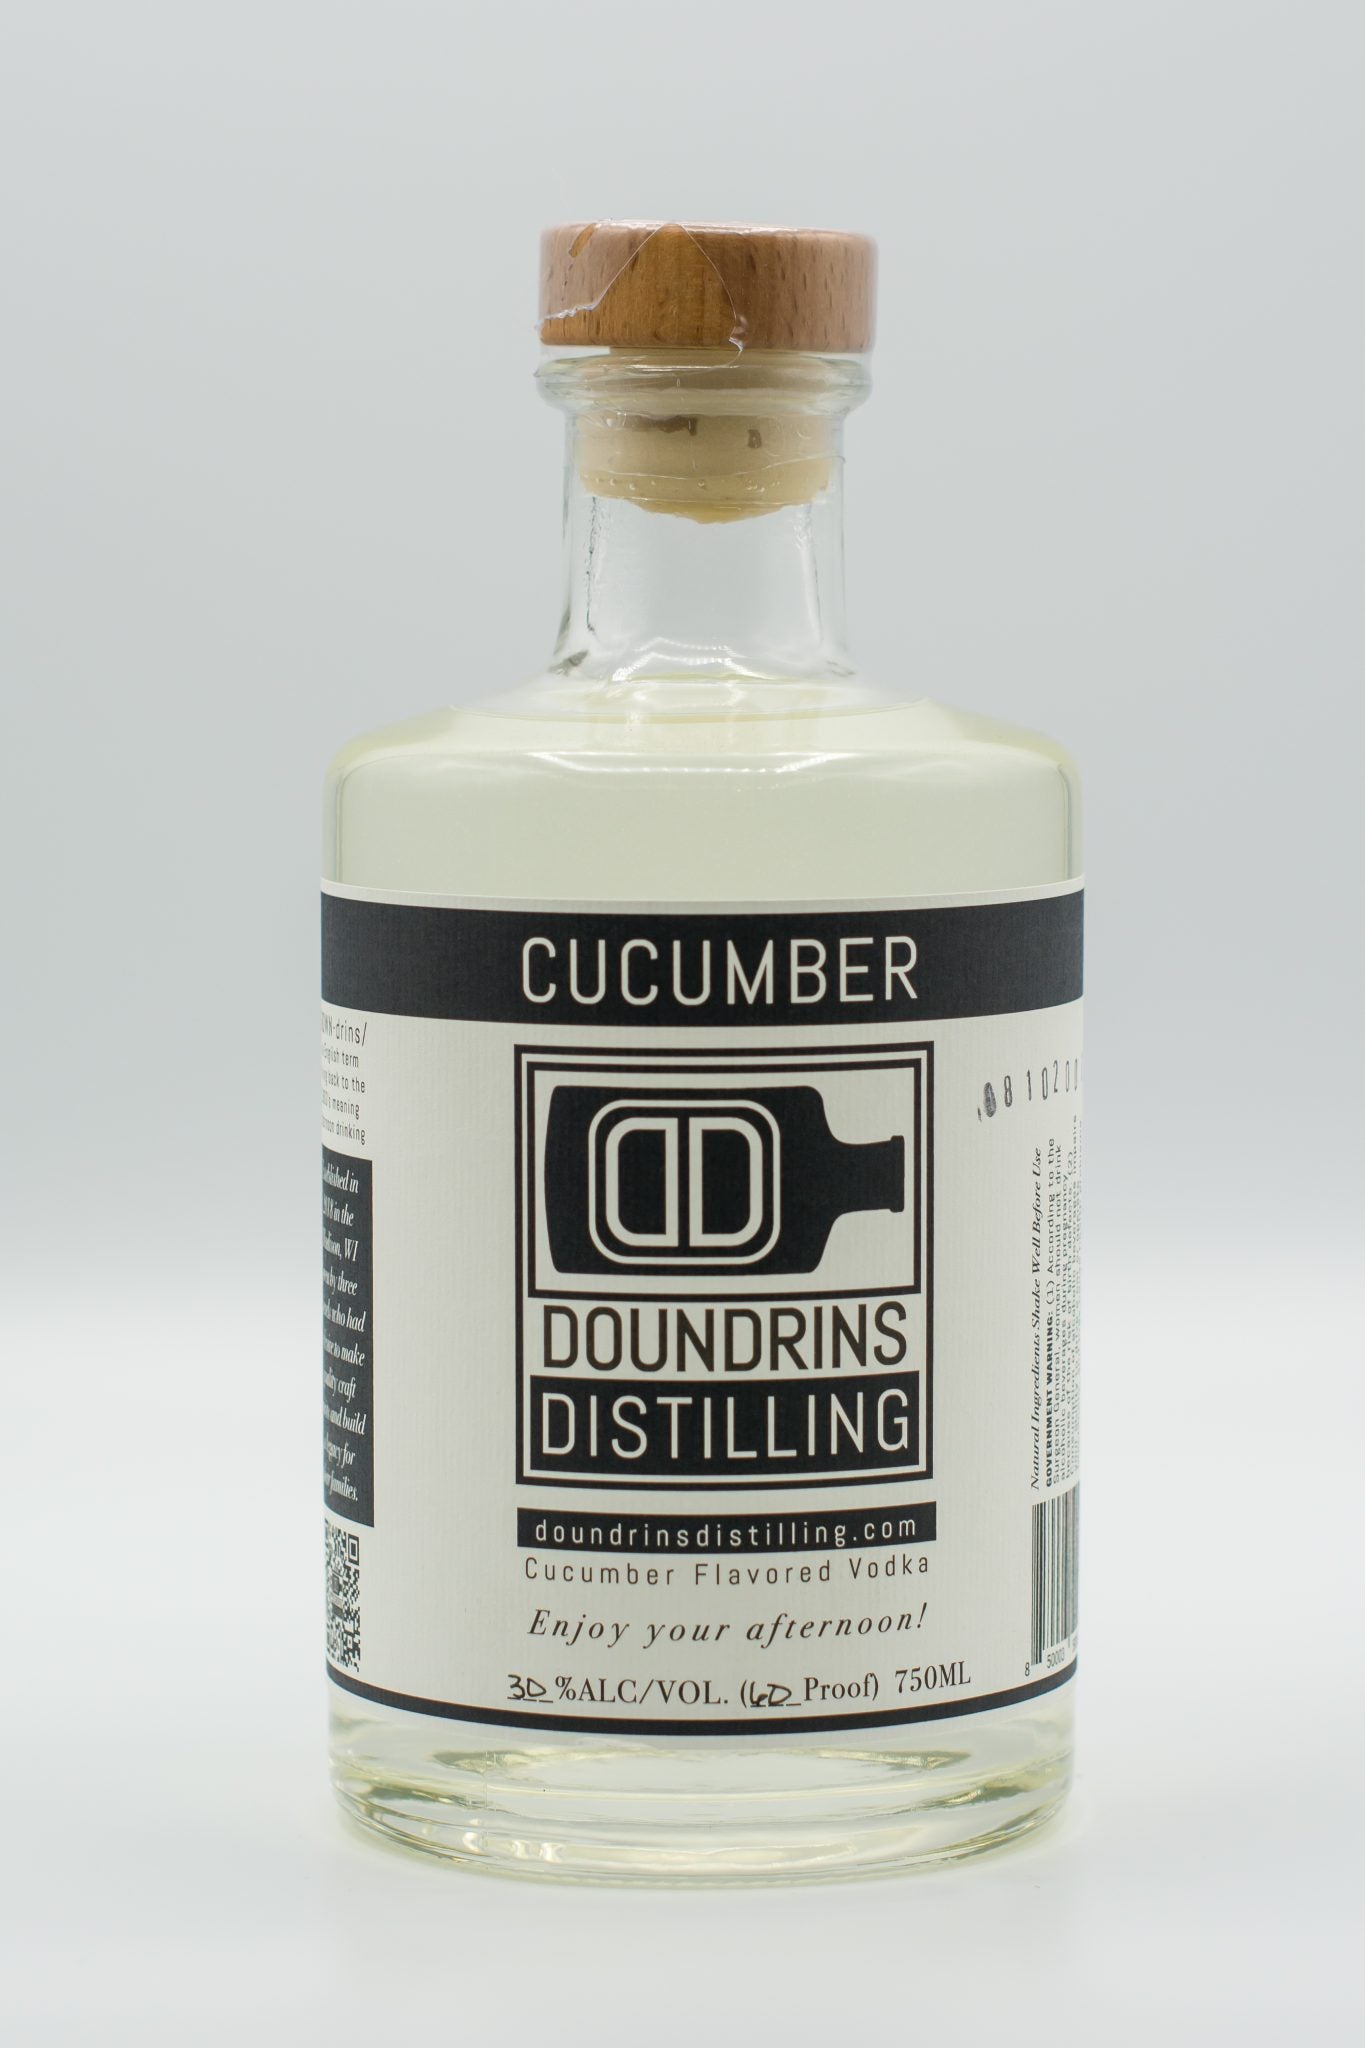 Cucumber Vodka